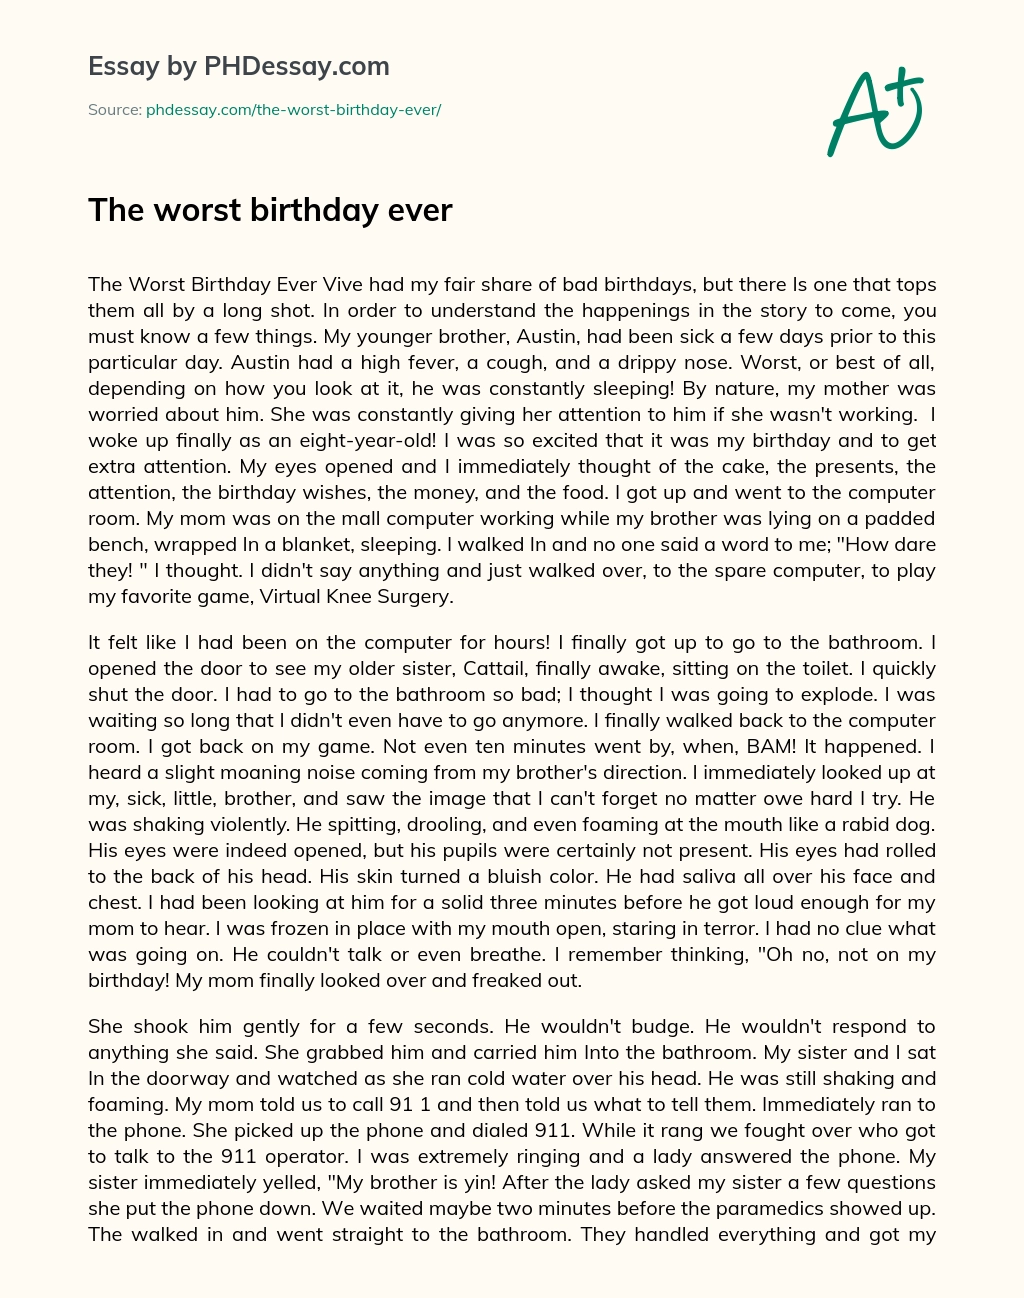 The worst birthday ever essay